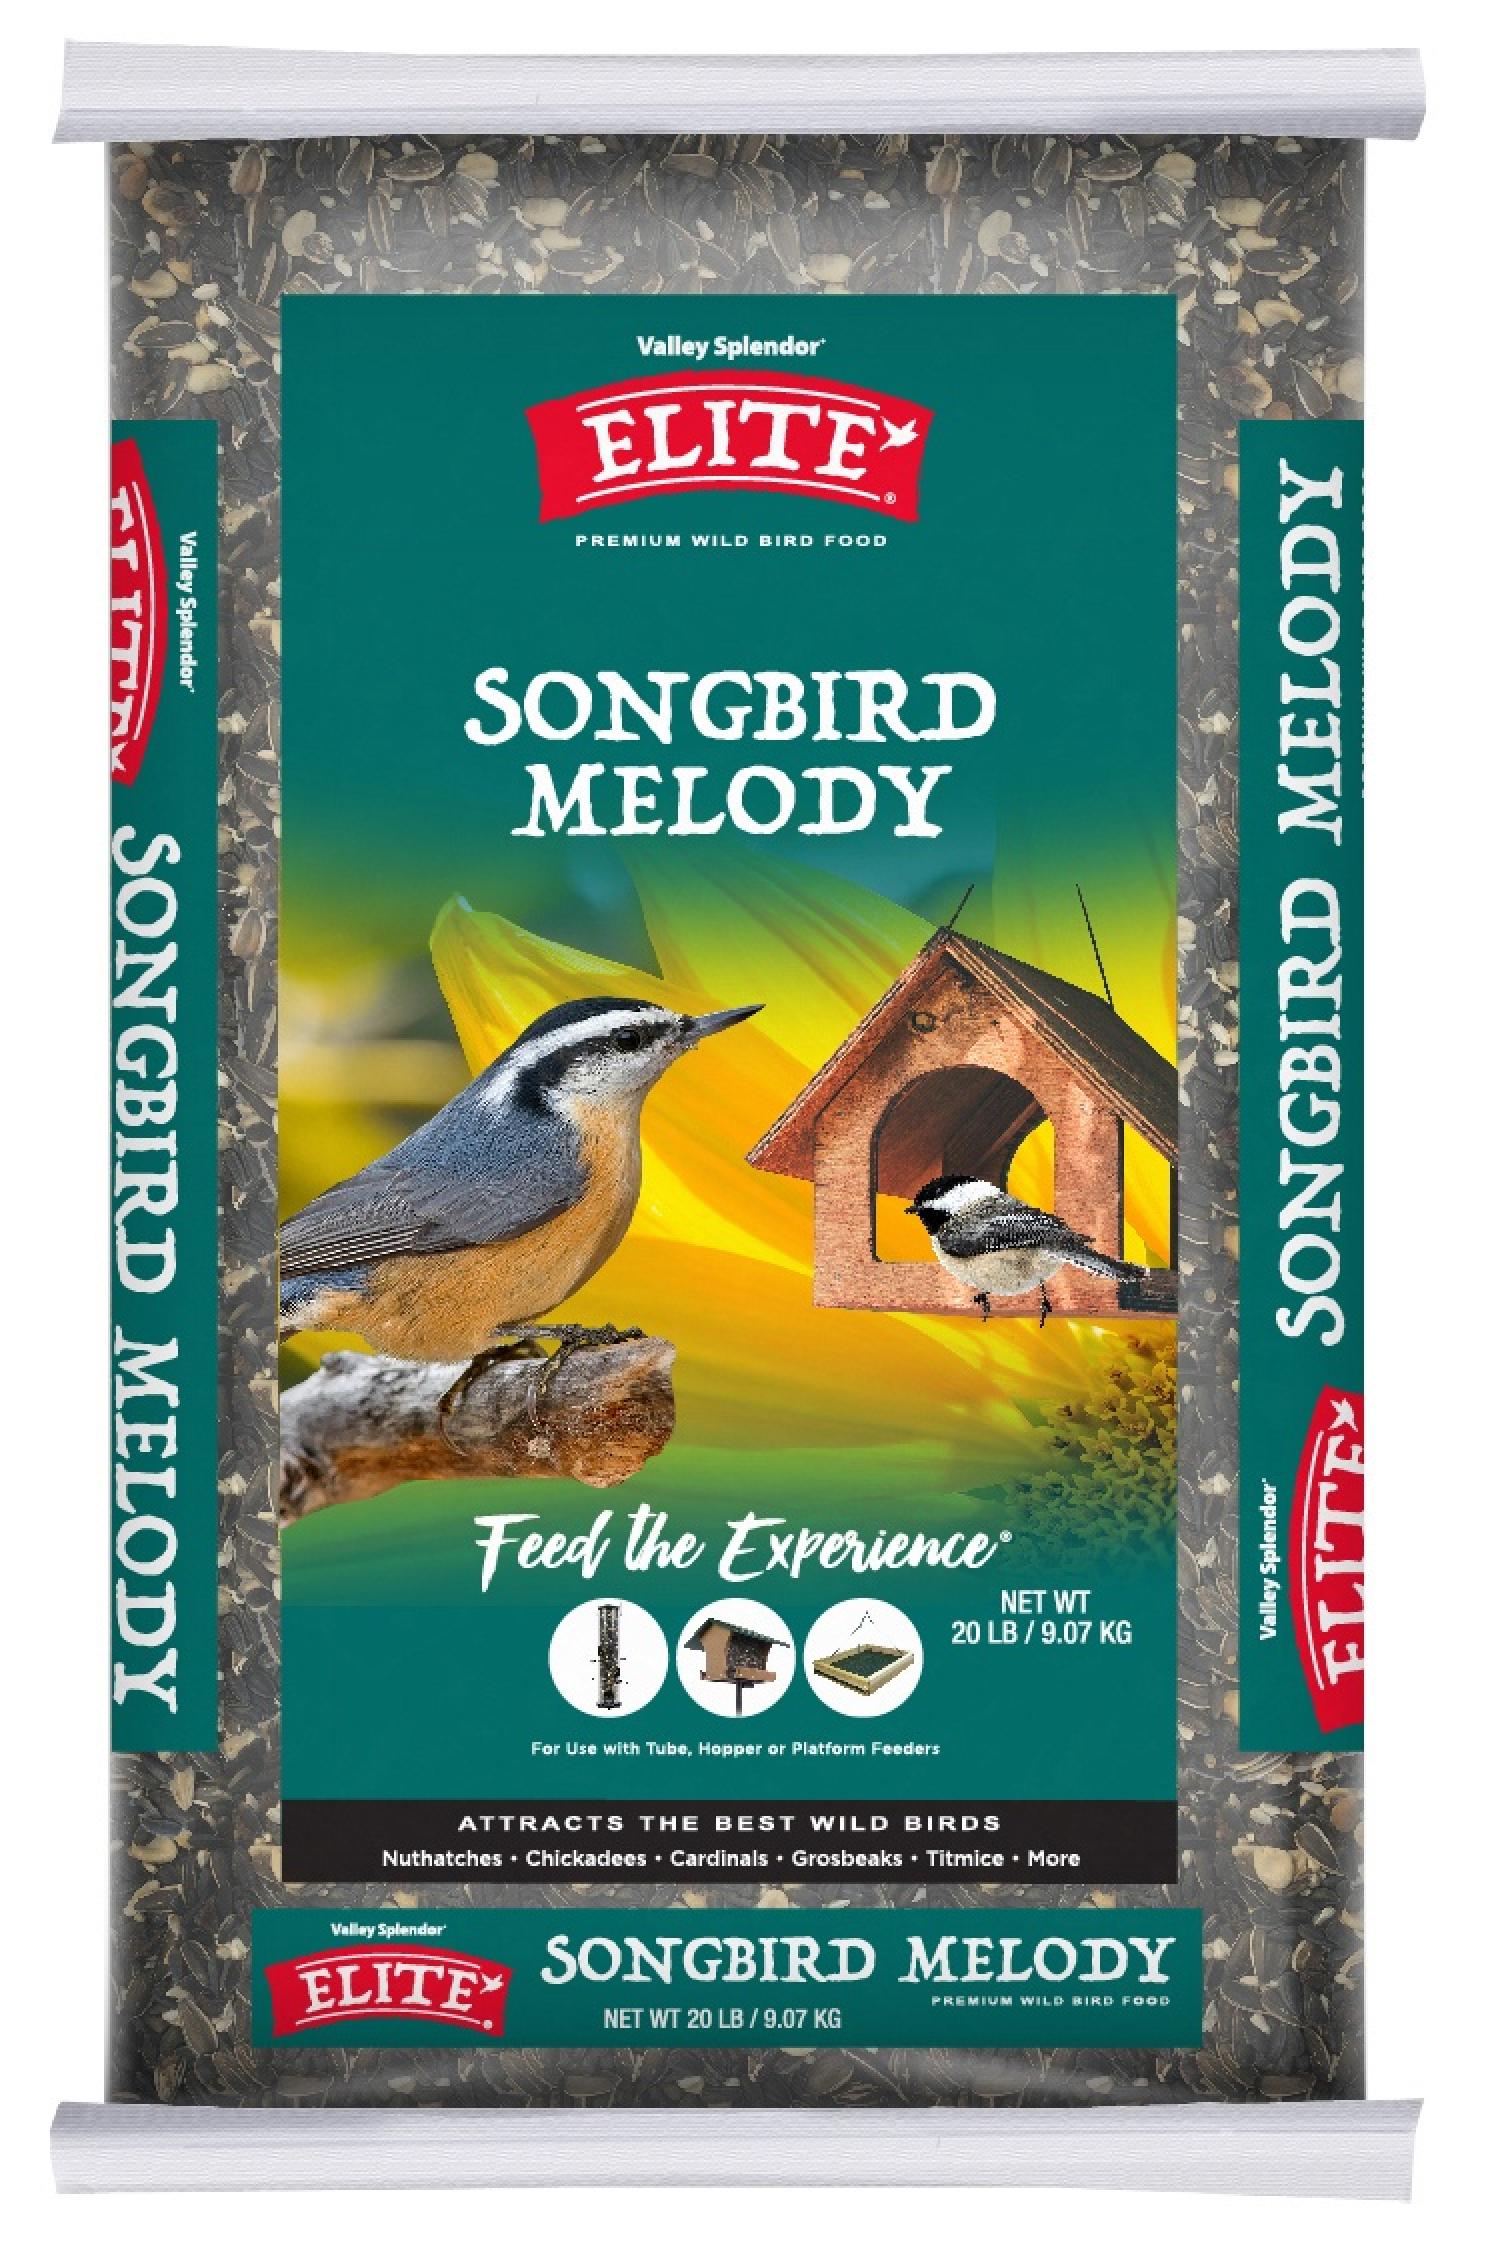 Valley Splendor Elite Songbird Melody